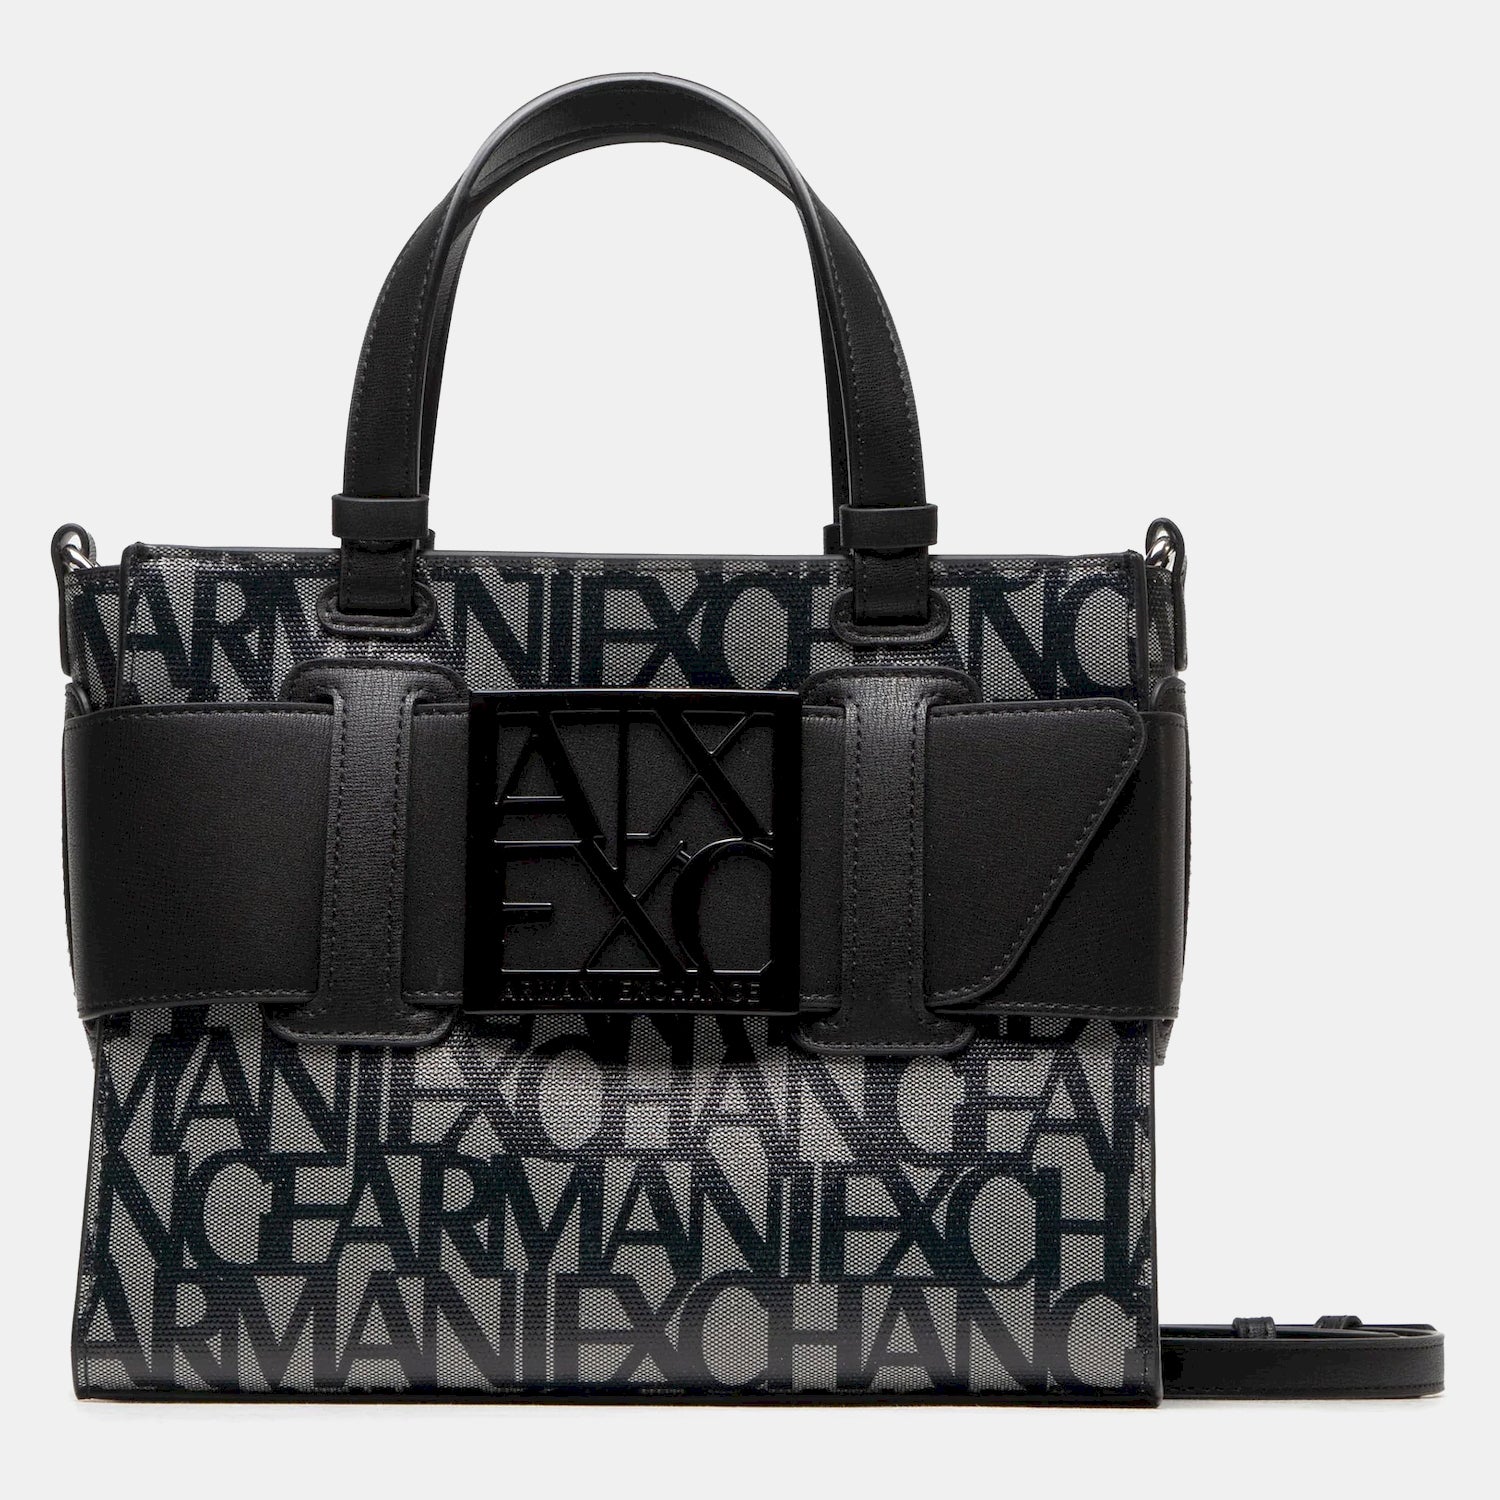 armani-exchange-bolsa-bag-942690-3f742-black.logo-preto_shot5